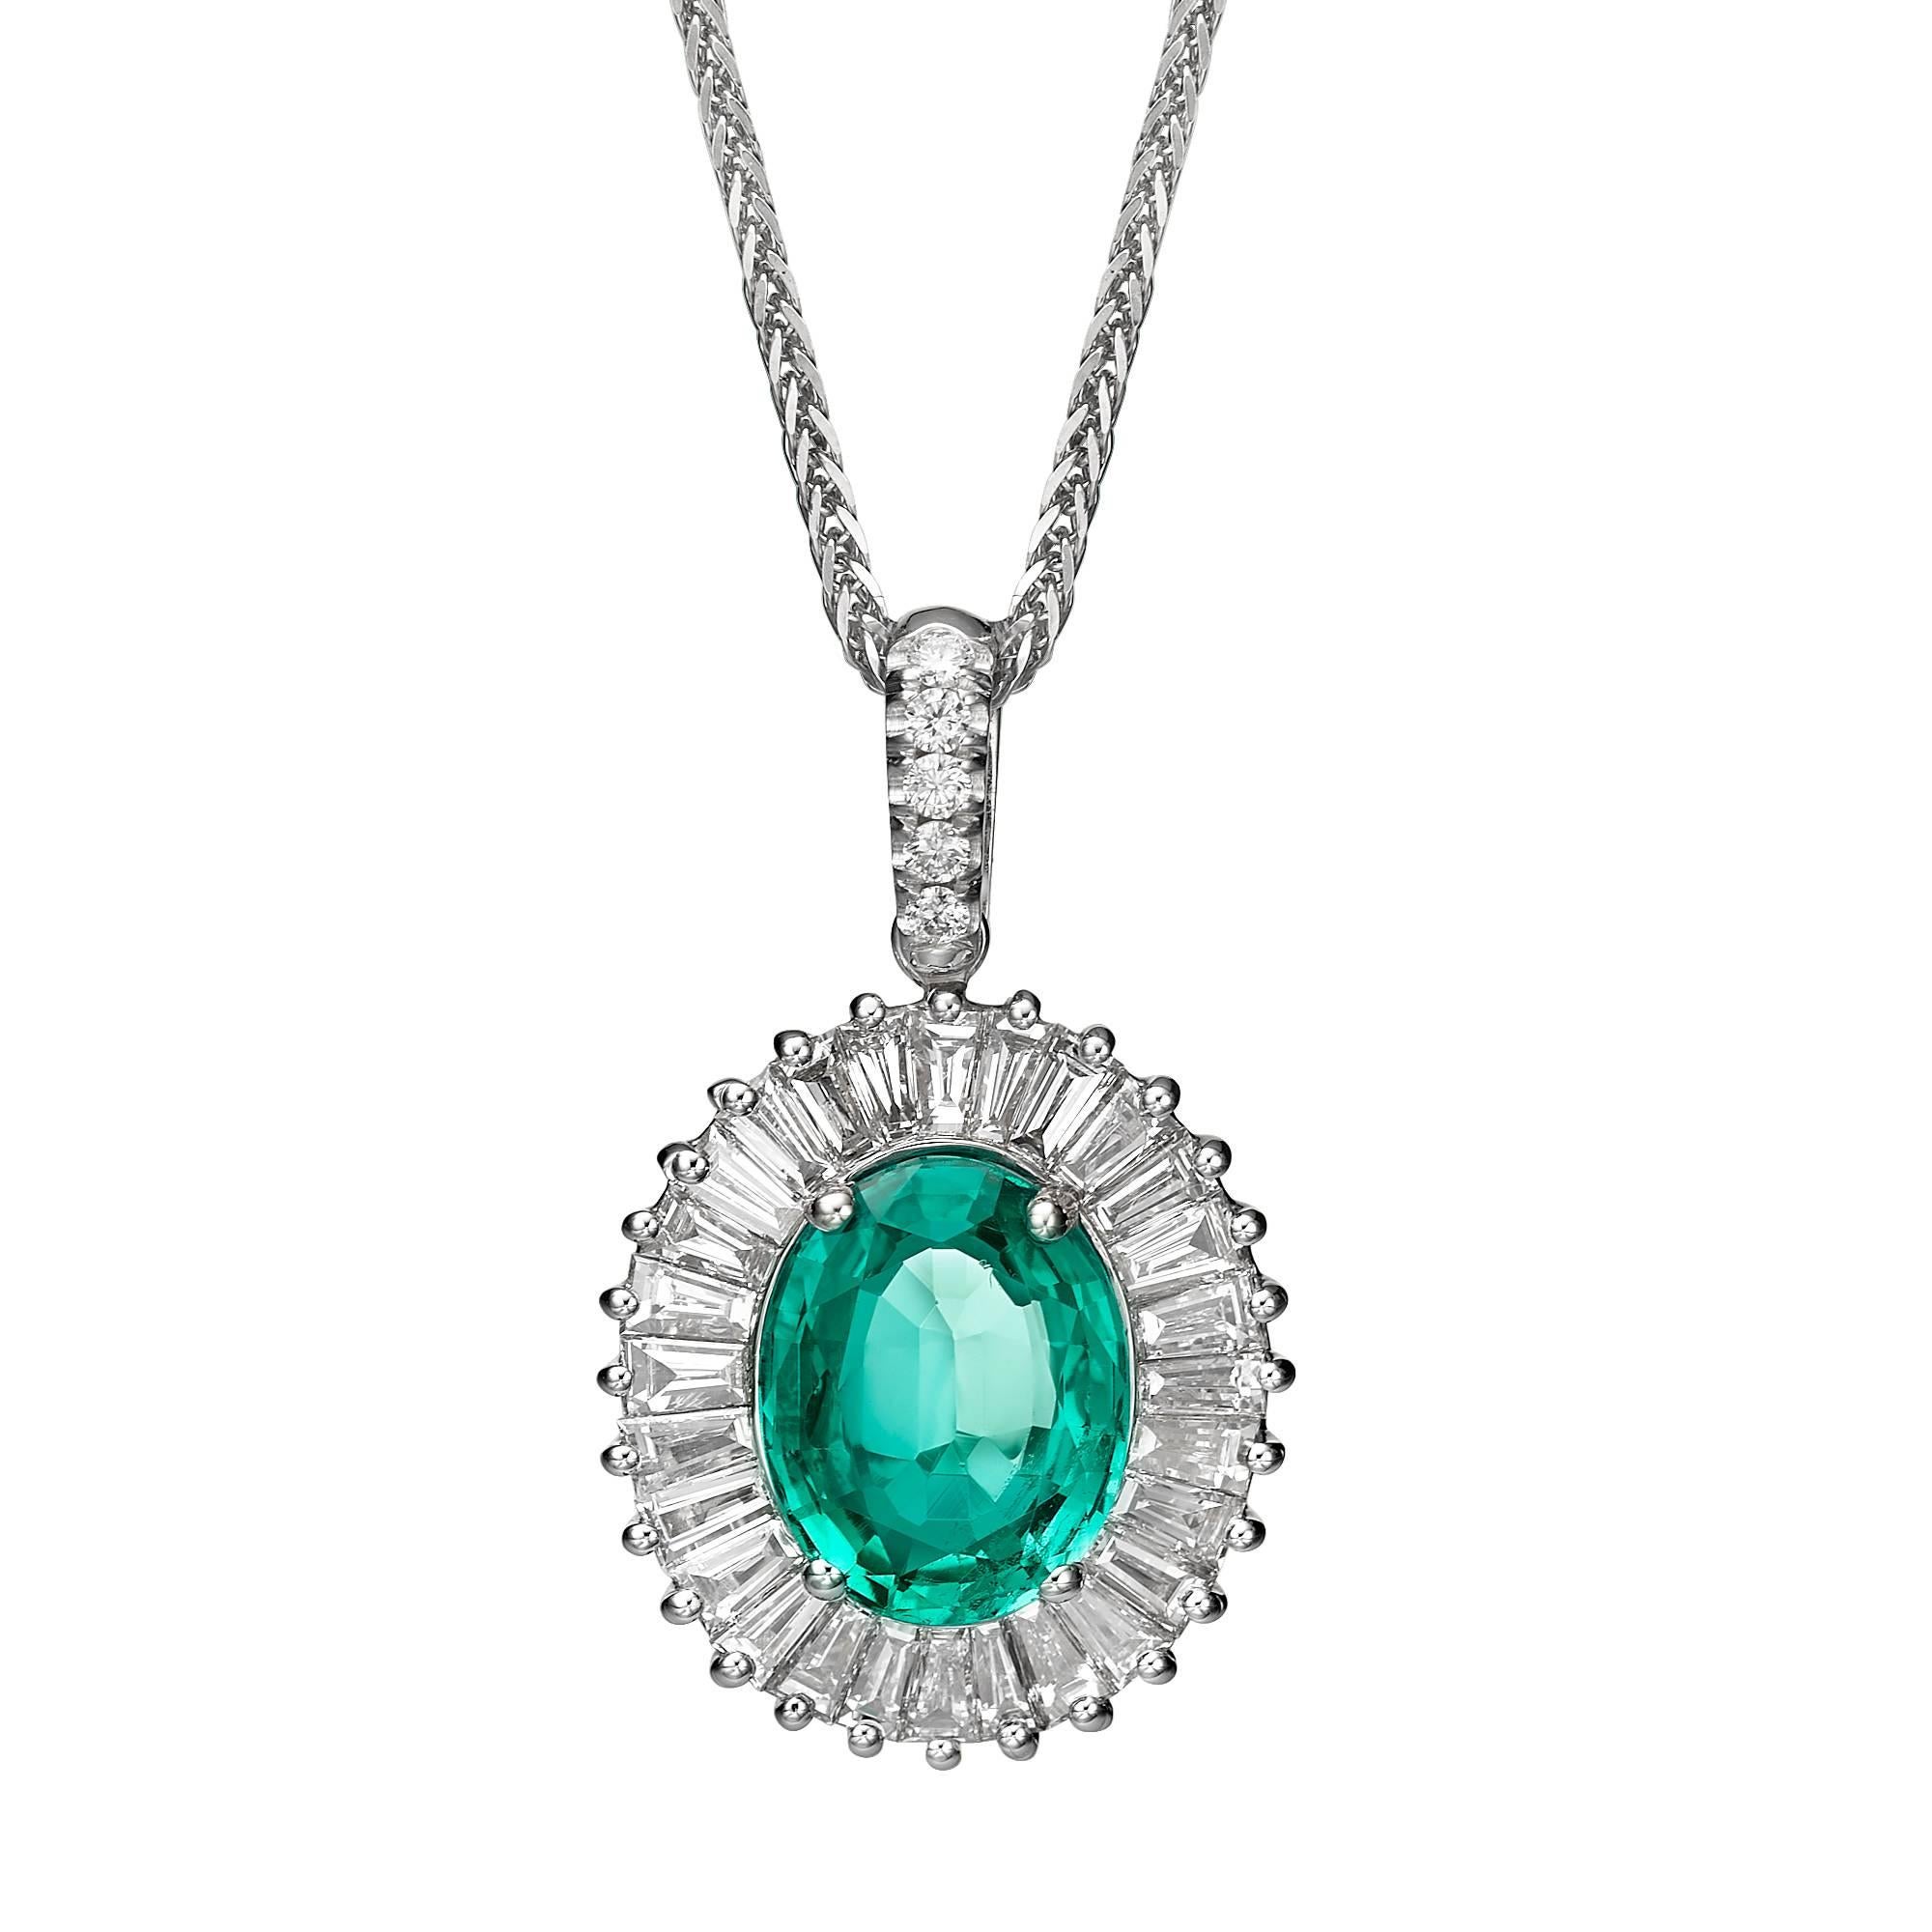  2.18 Carat Natural Emerald & Diamond Ballerina Style Pendant Necklace For Sale